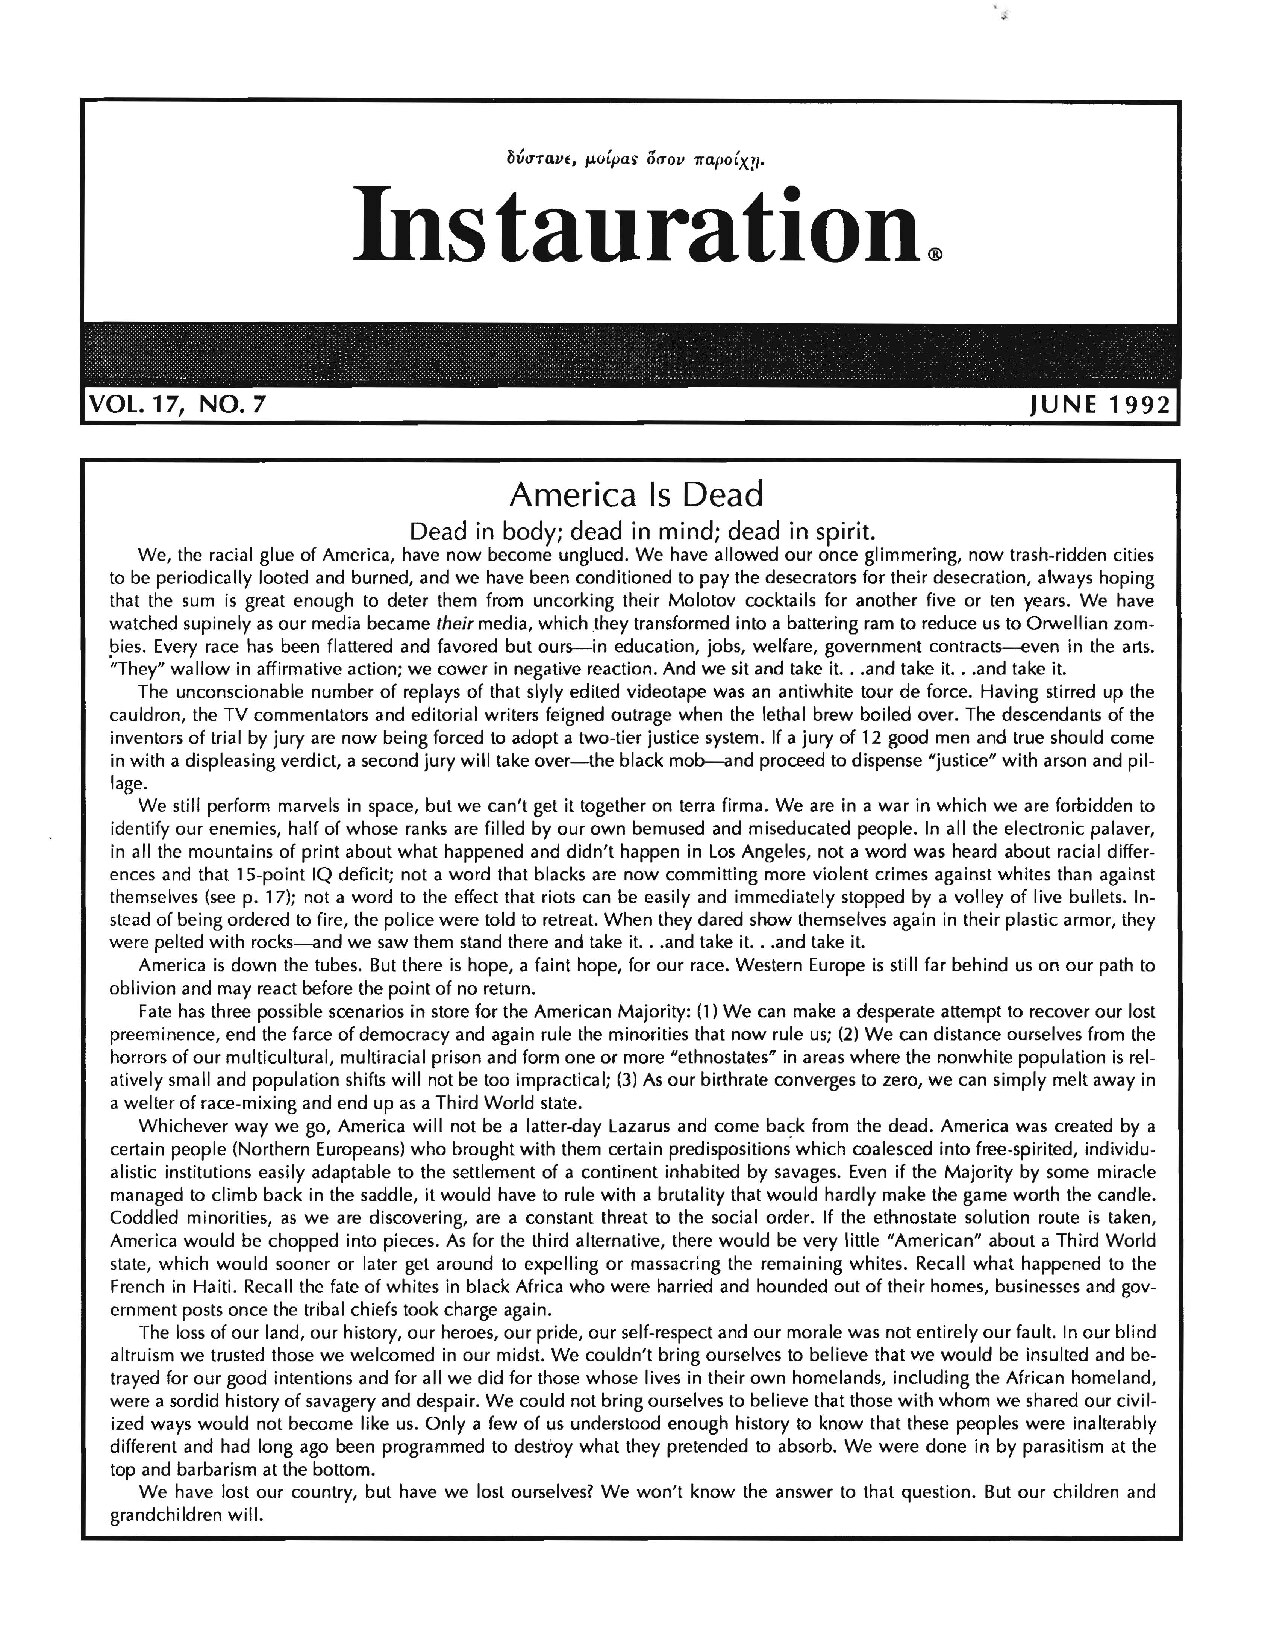 Instauration-1992-06-June-Vol17-No7